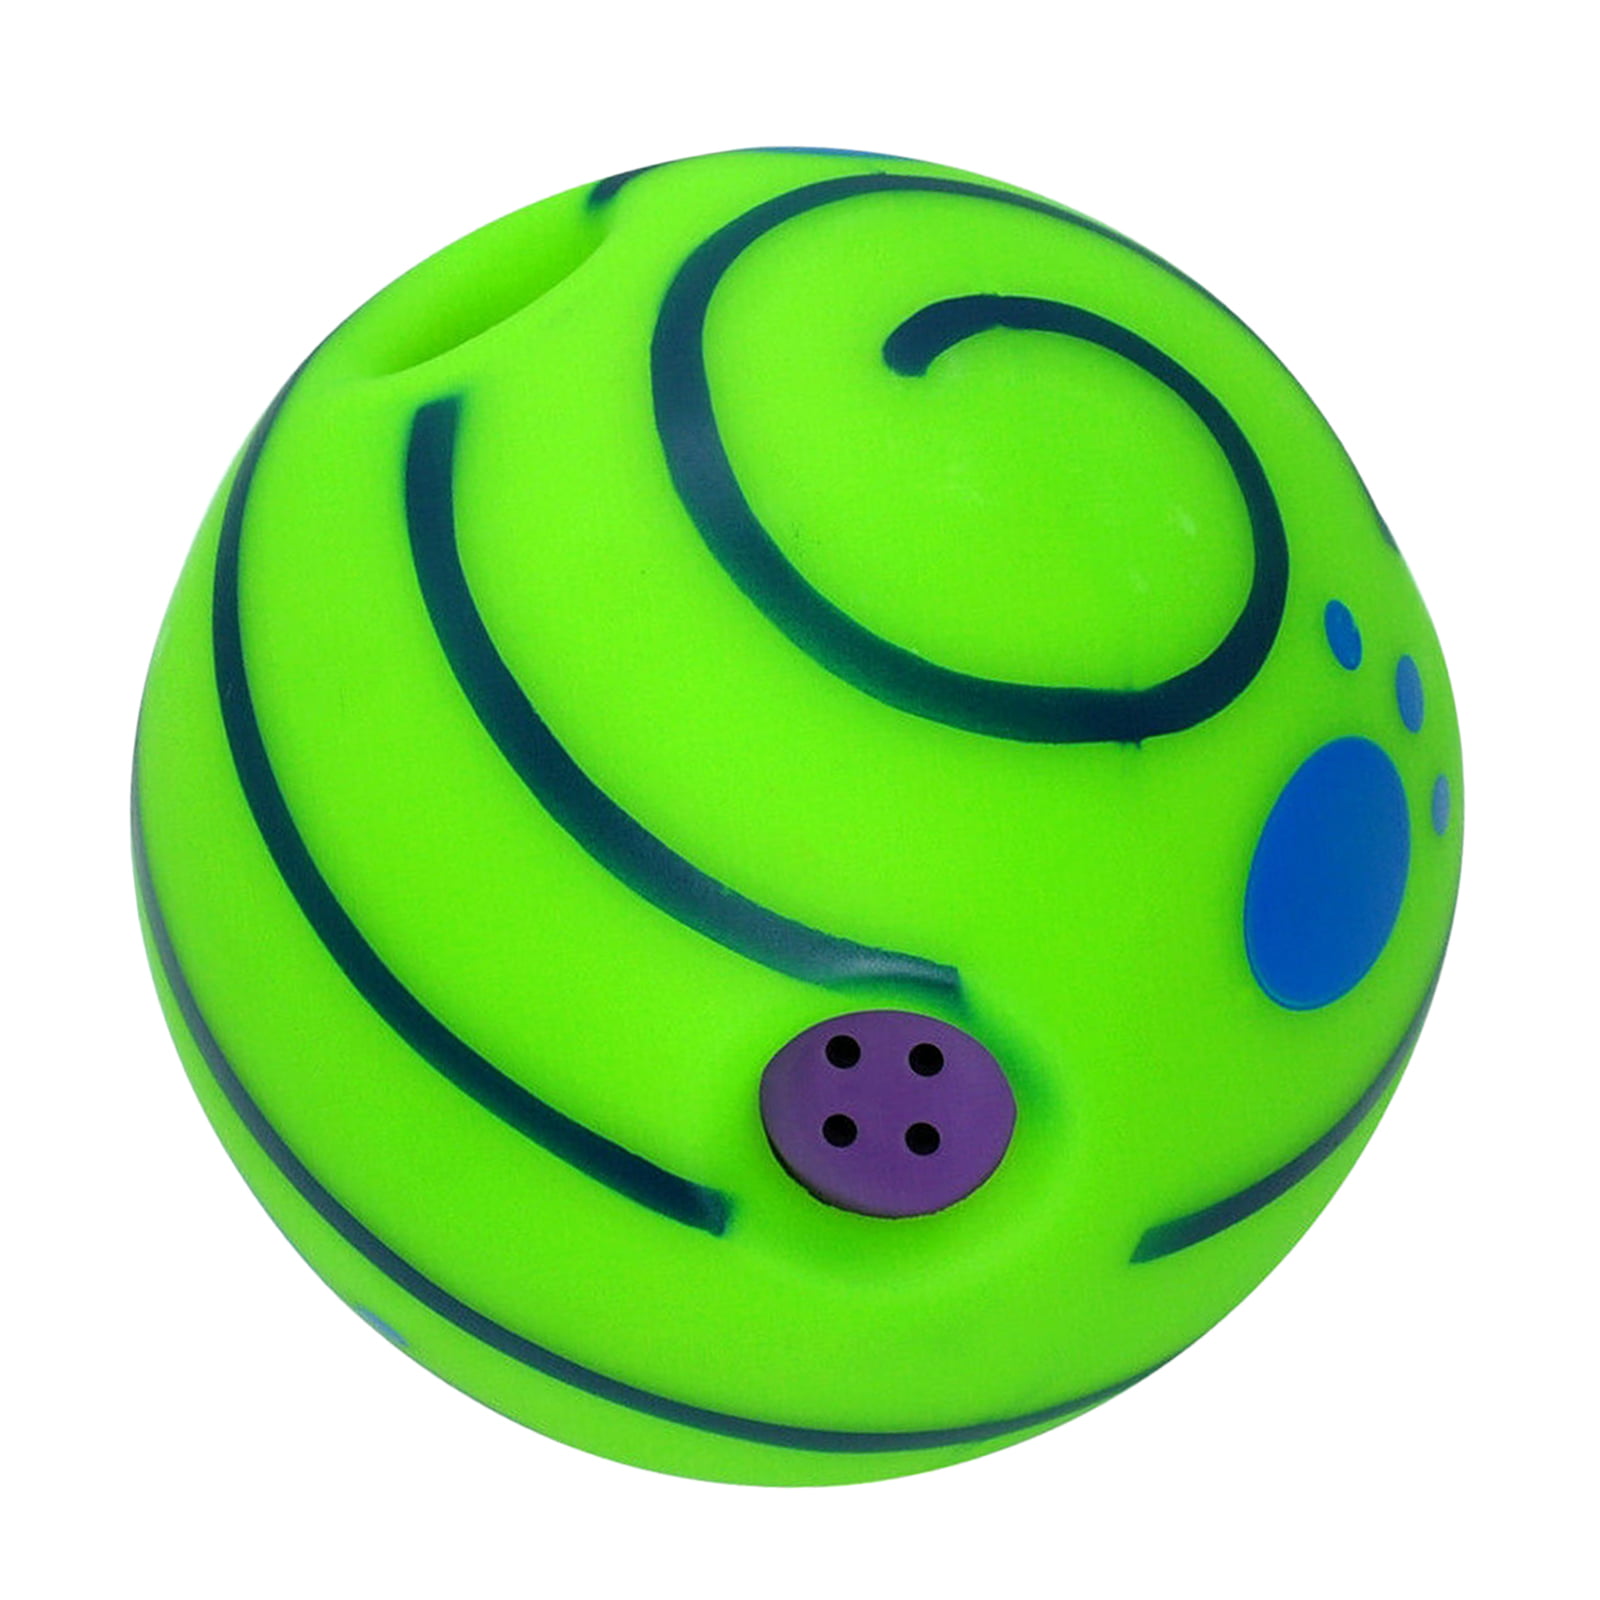 Wobble Ball Ball Dog Doggy Enjoy Play Ball Pet Toy Rolling Shaken w Sound -...